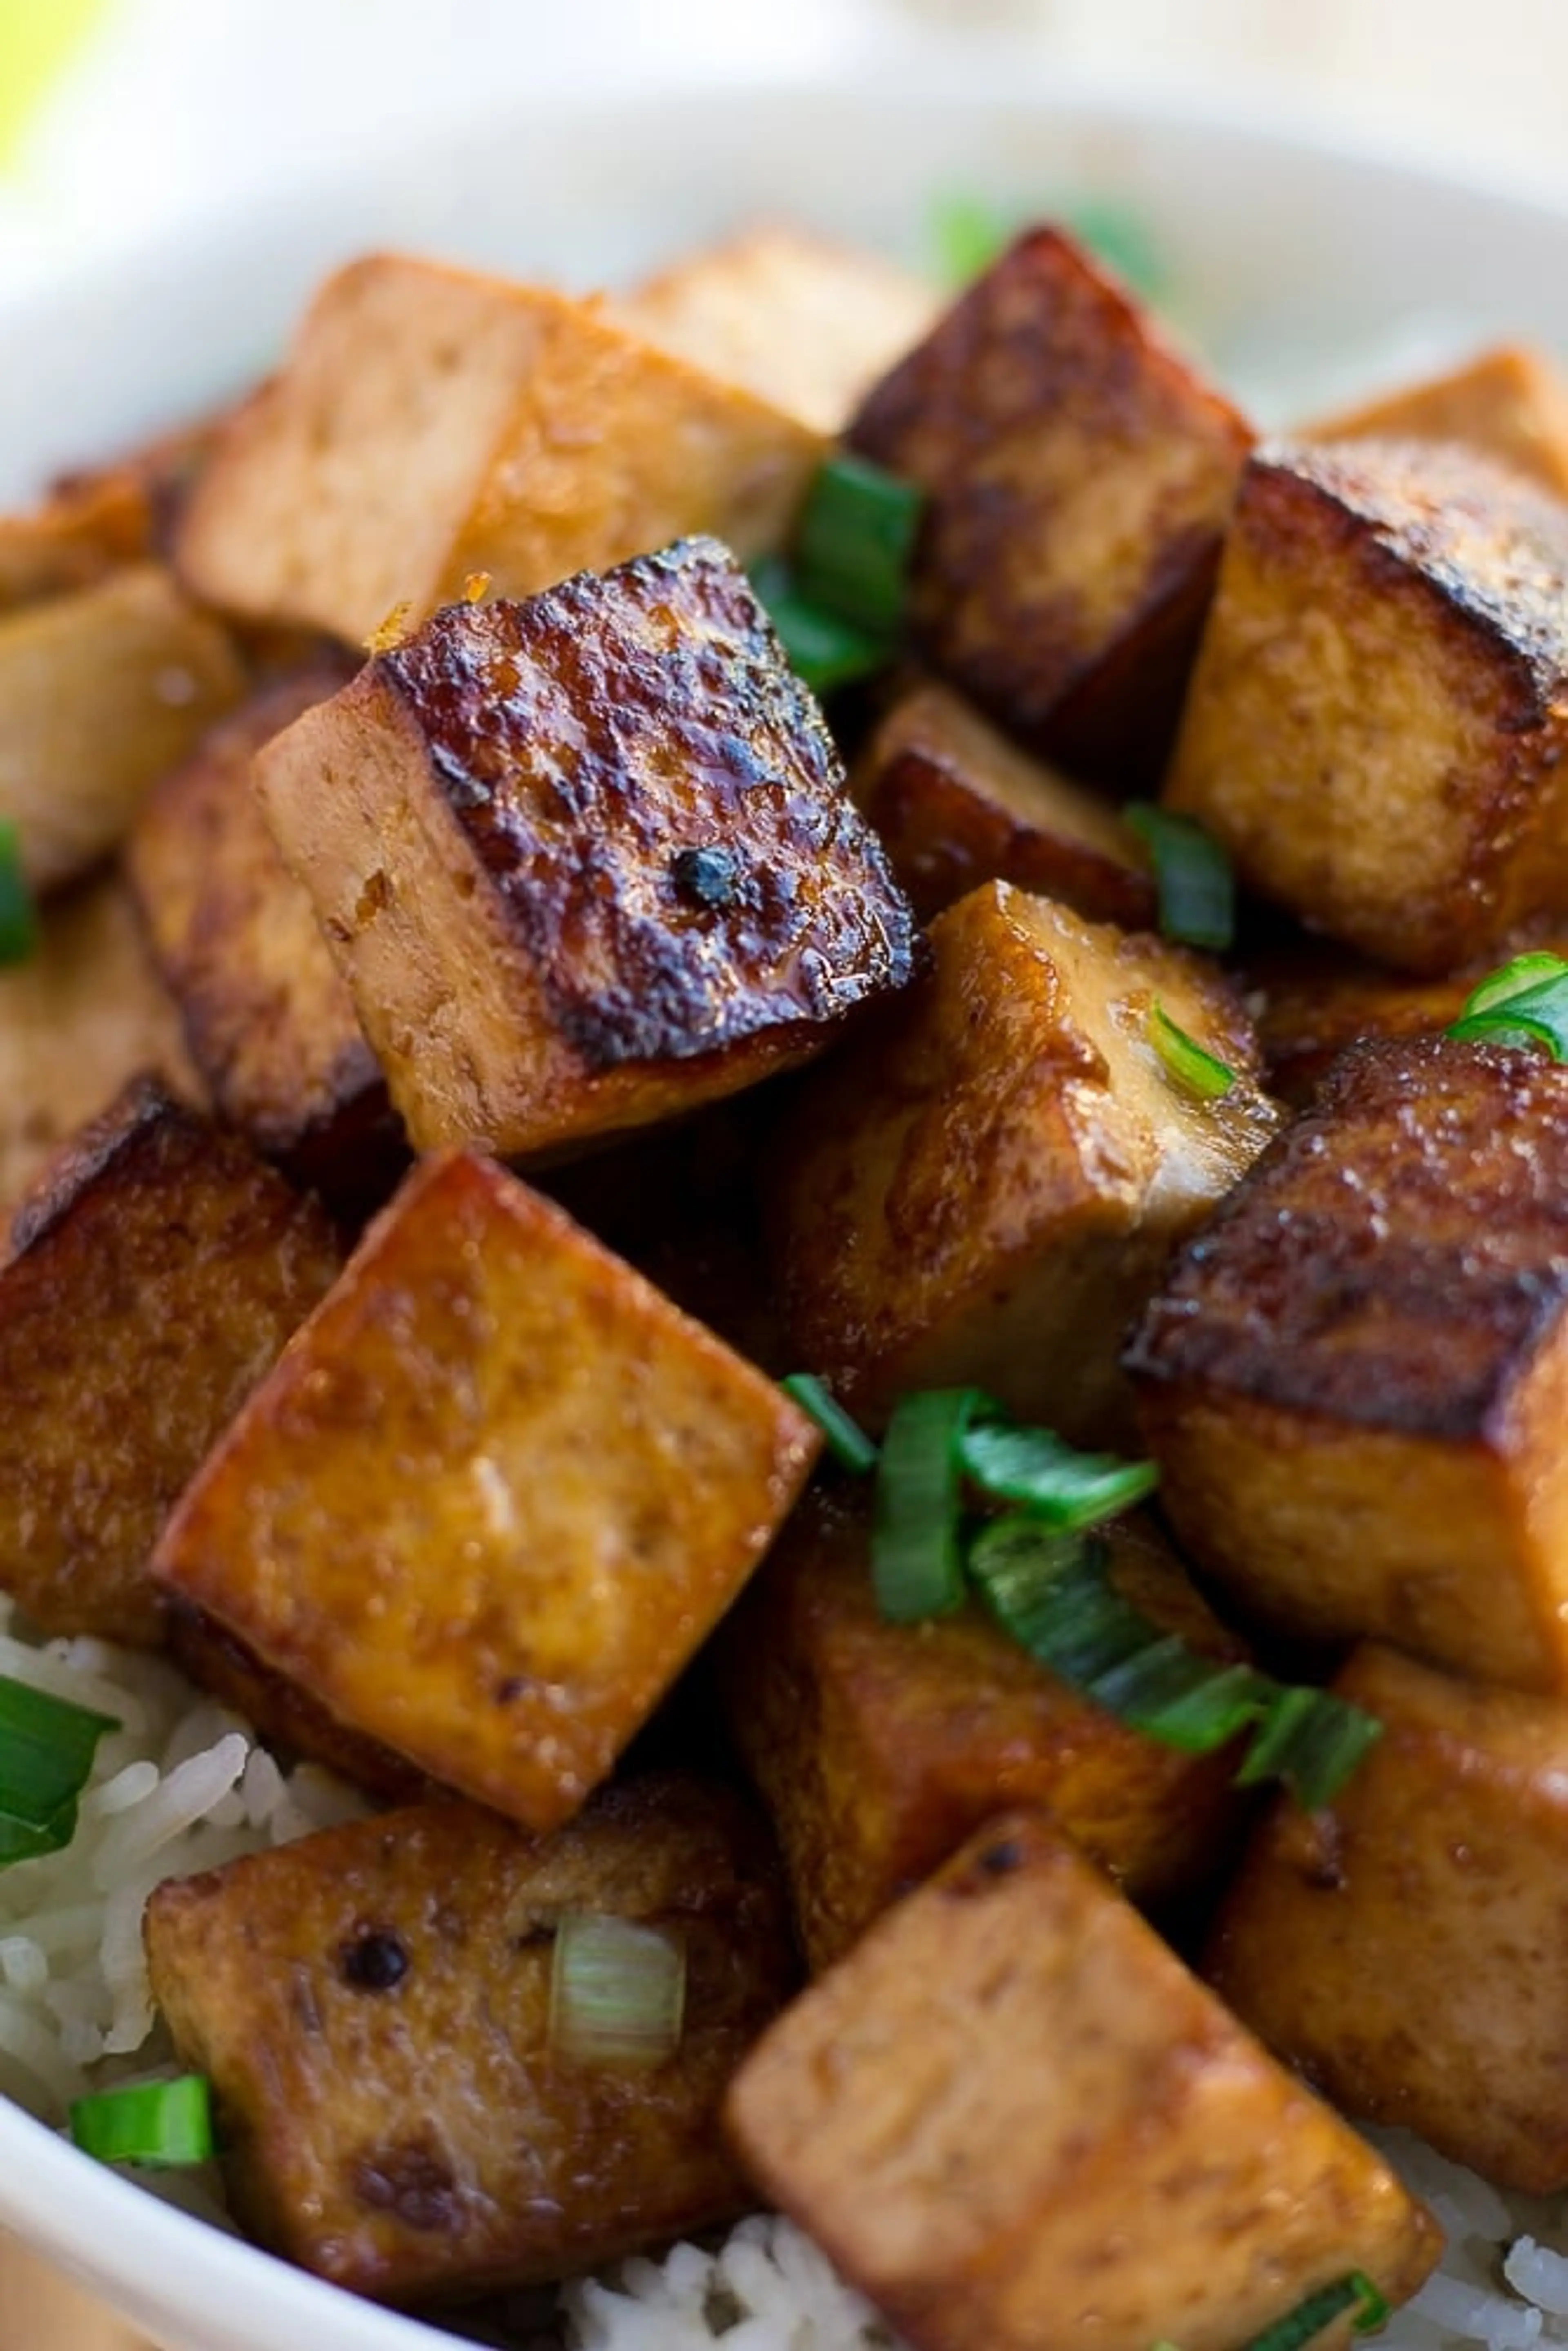 Marinated Tofu (The Best Tofu Ever!)